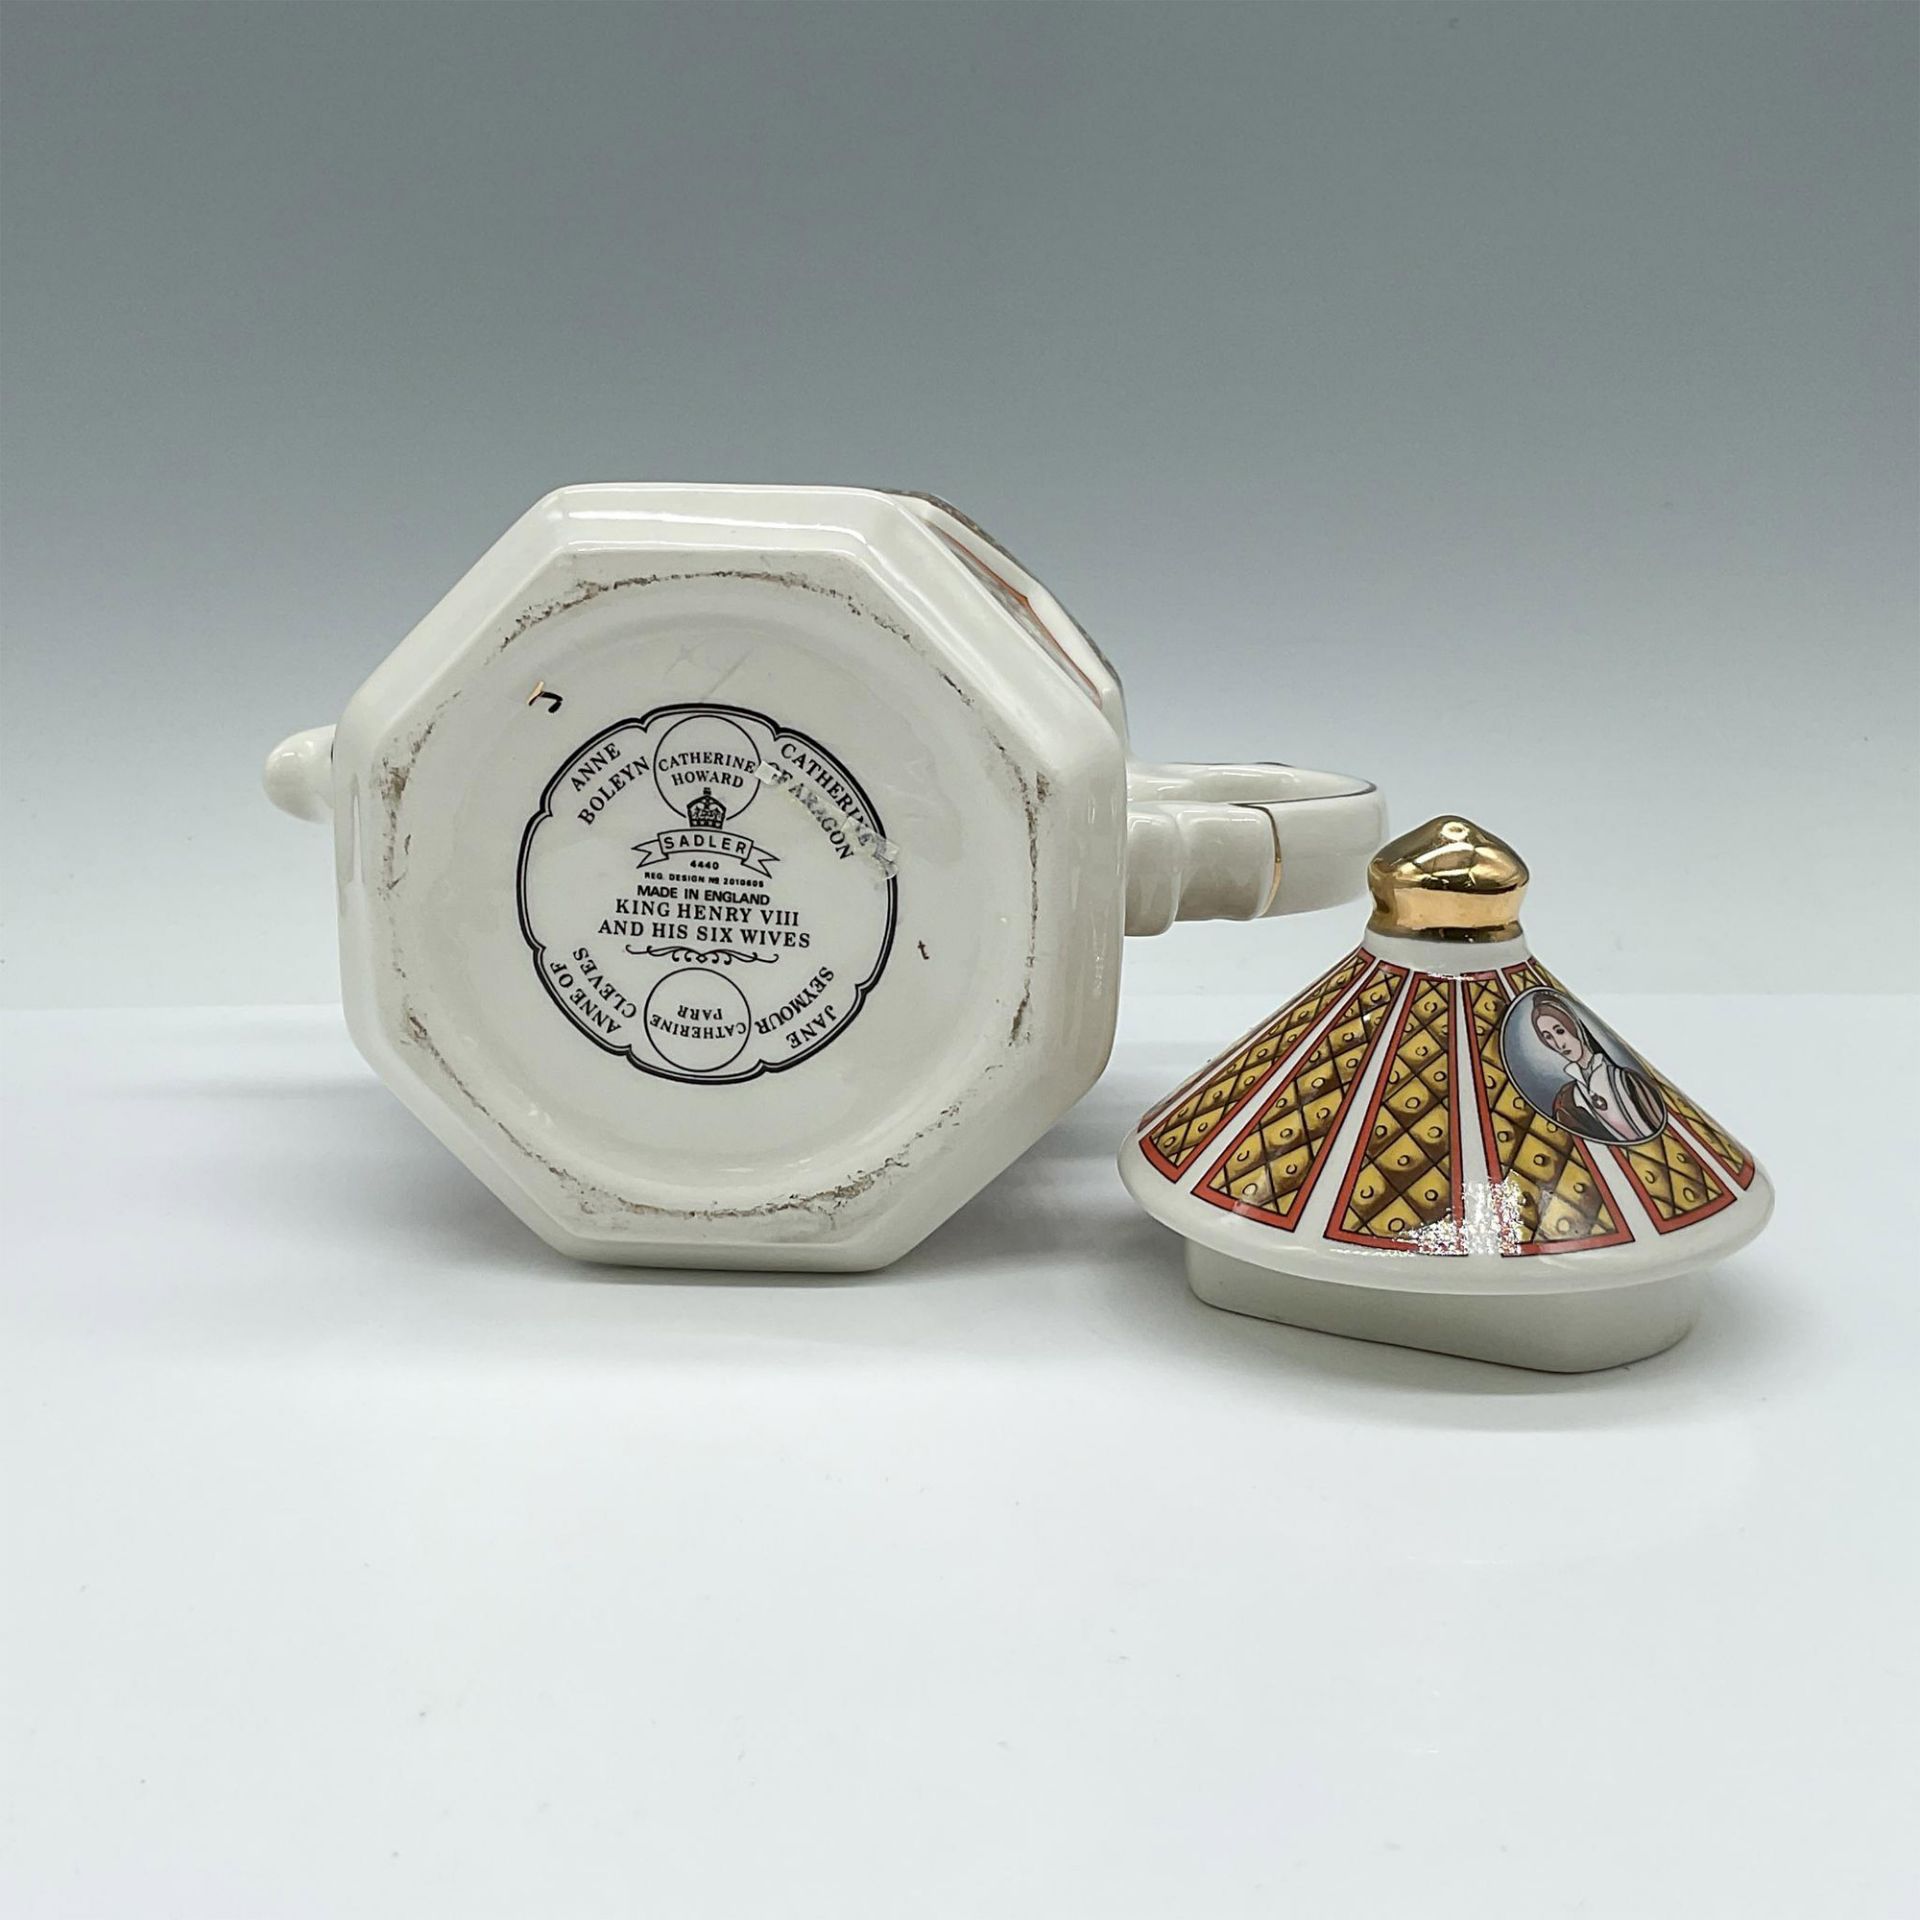 Sadler Lidded Teapot, King Henry VIII & 6 Wives - Image 3 of 3